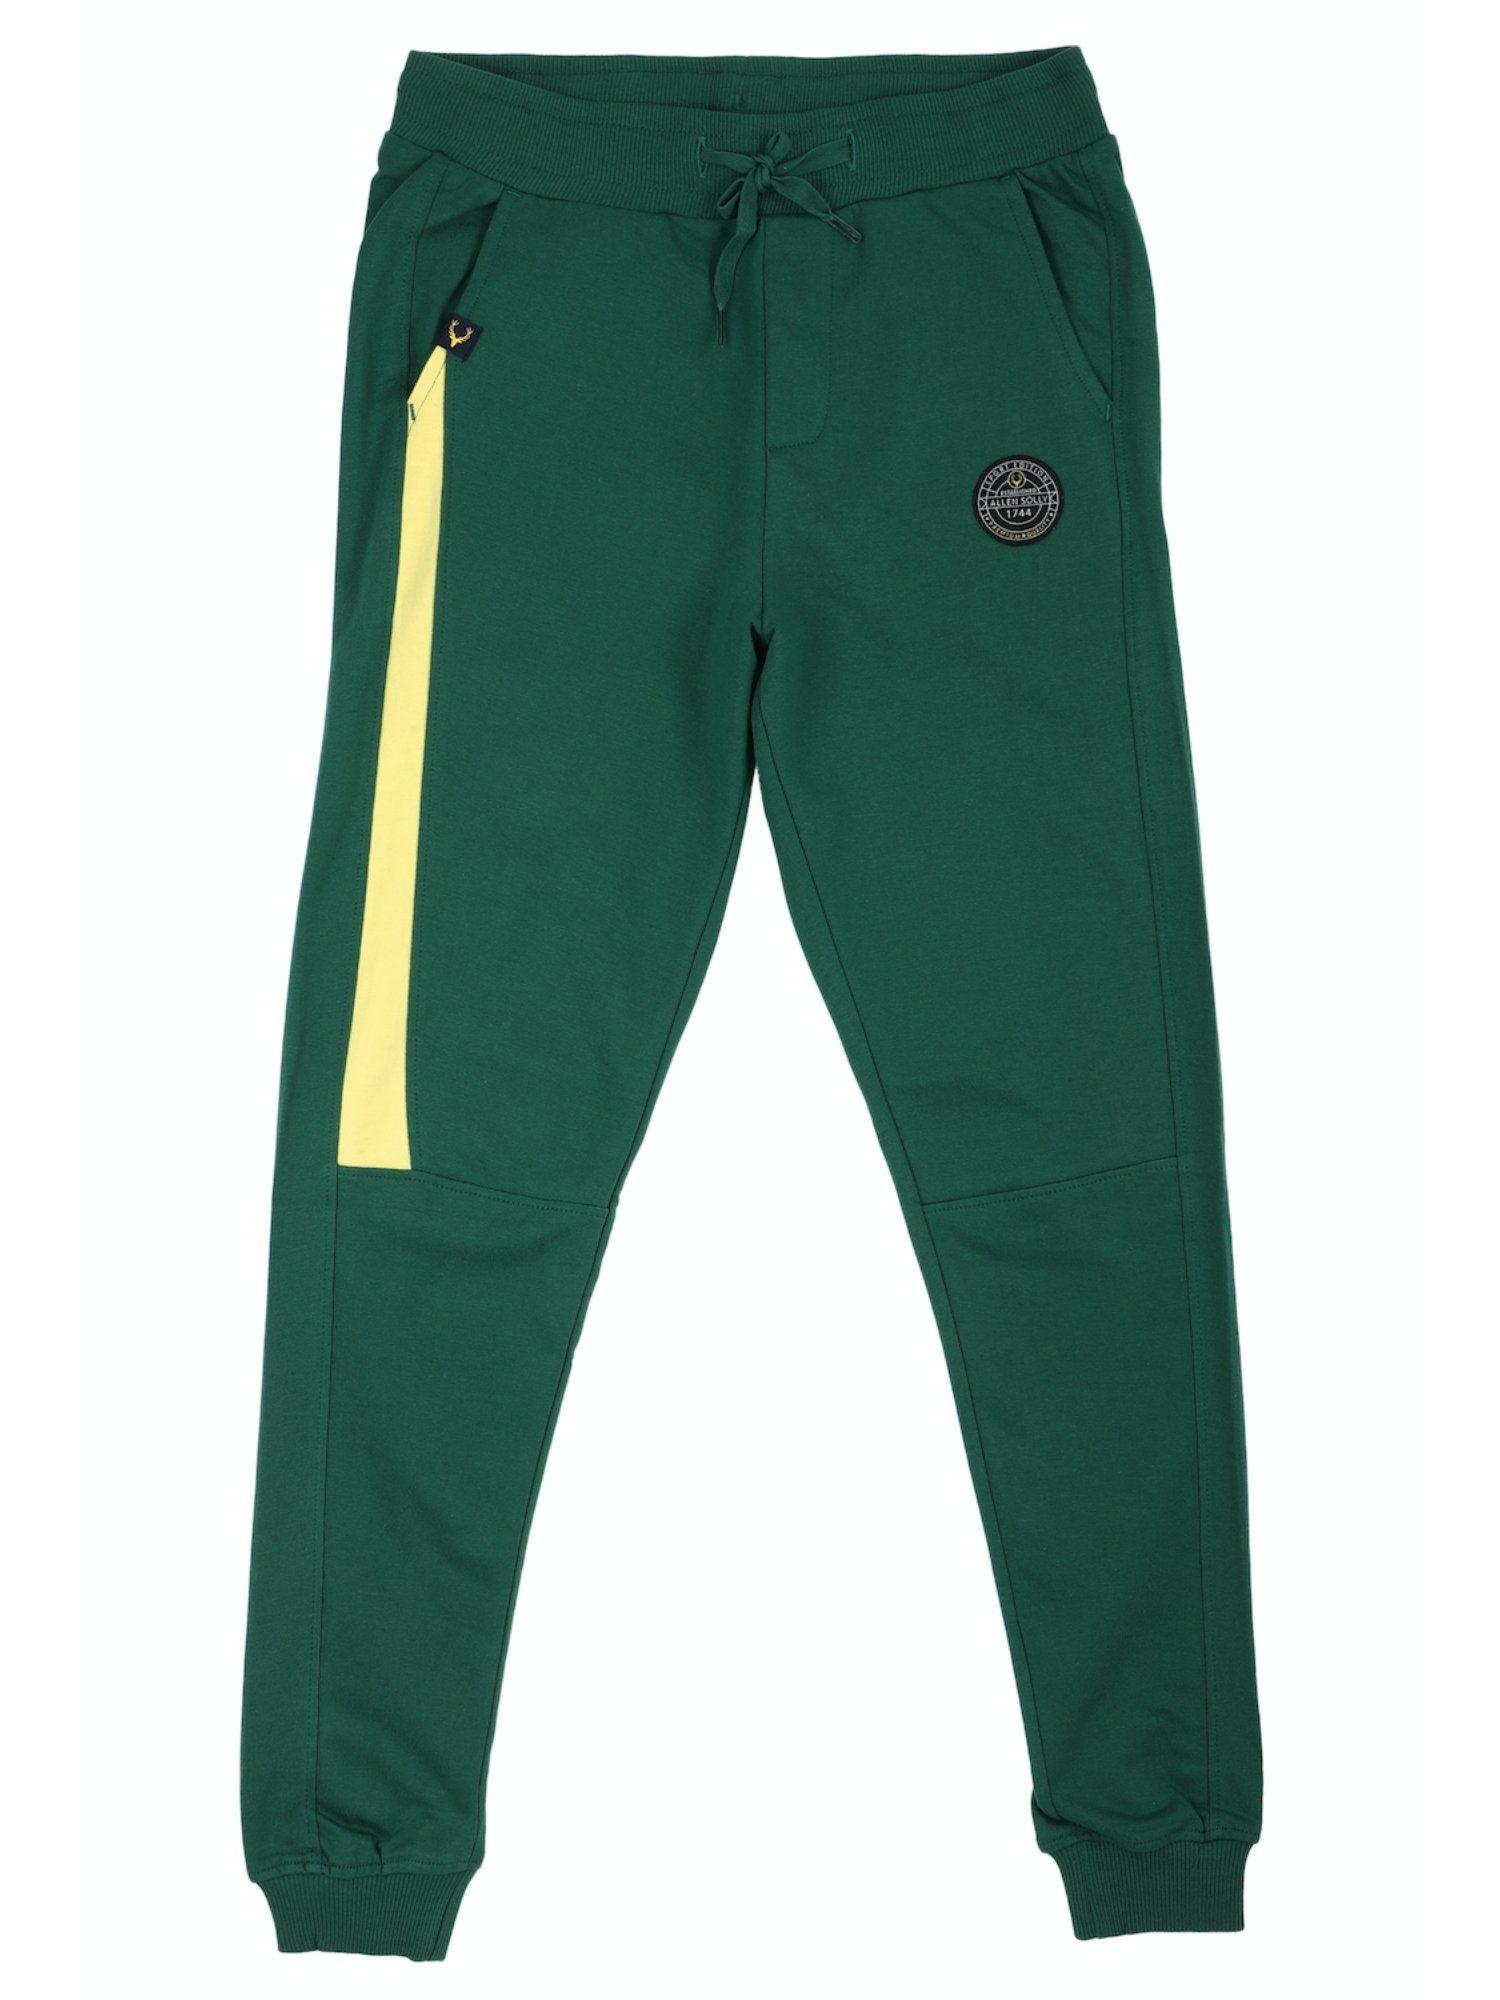 boys green regular fit patterned jogger pants